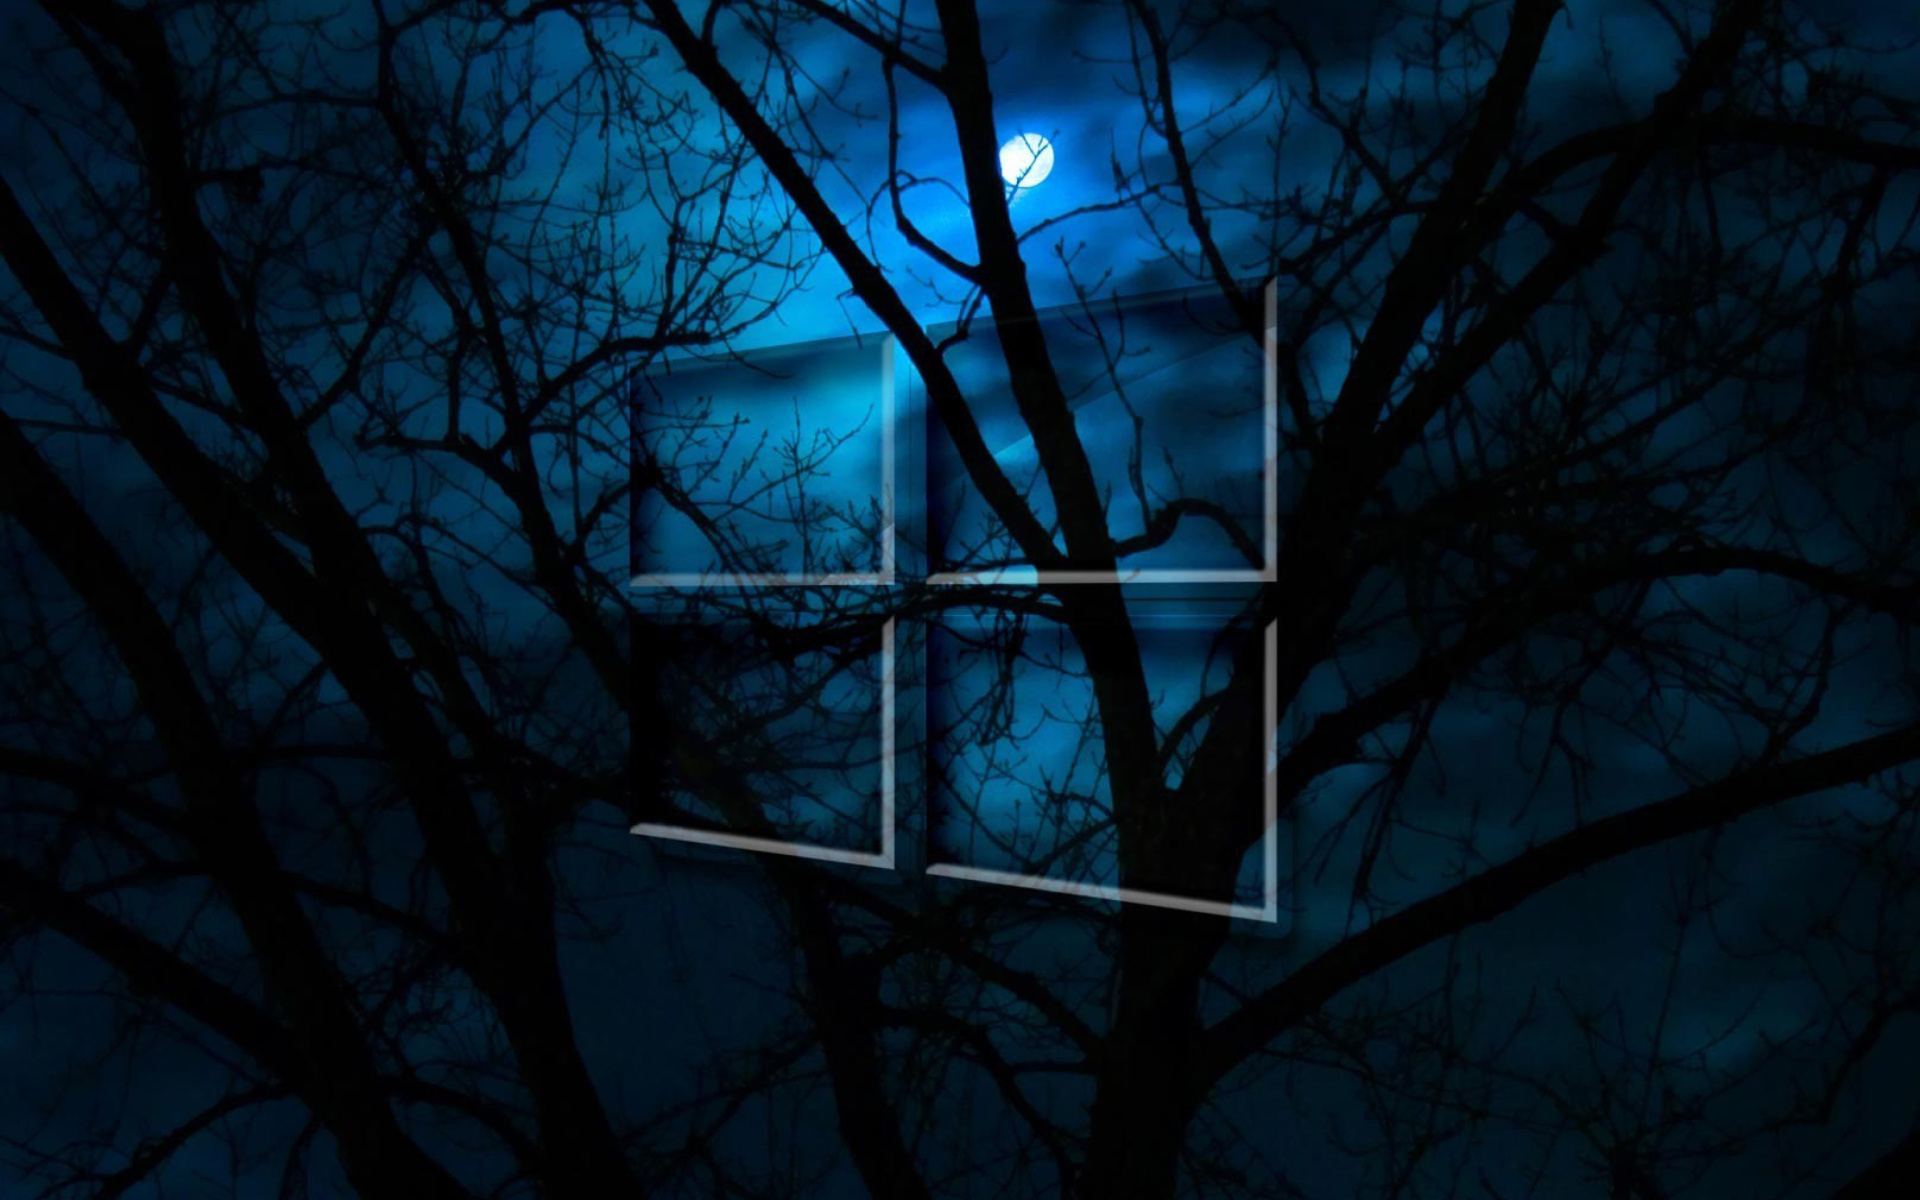 Free download Windows 10 HD Moon Night Wallpaper for Widescreen Desktop ... Full Hd Wallpapers For Windows 8 1920x1080